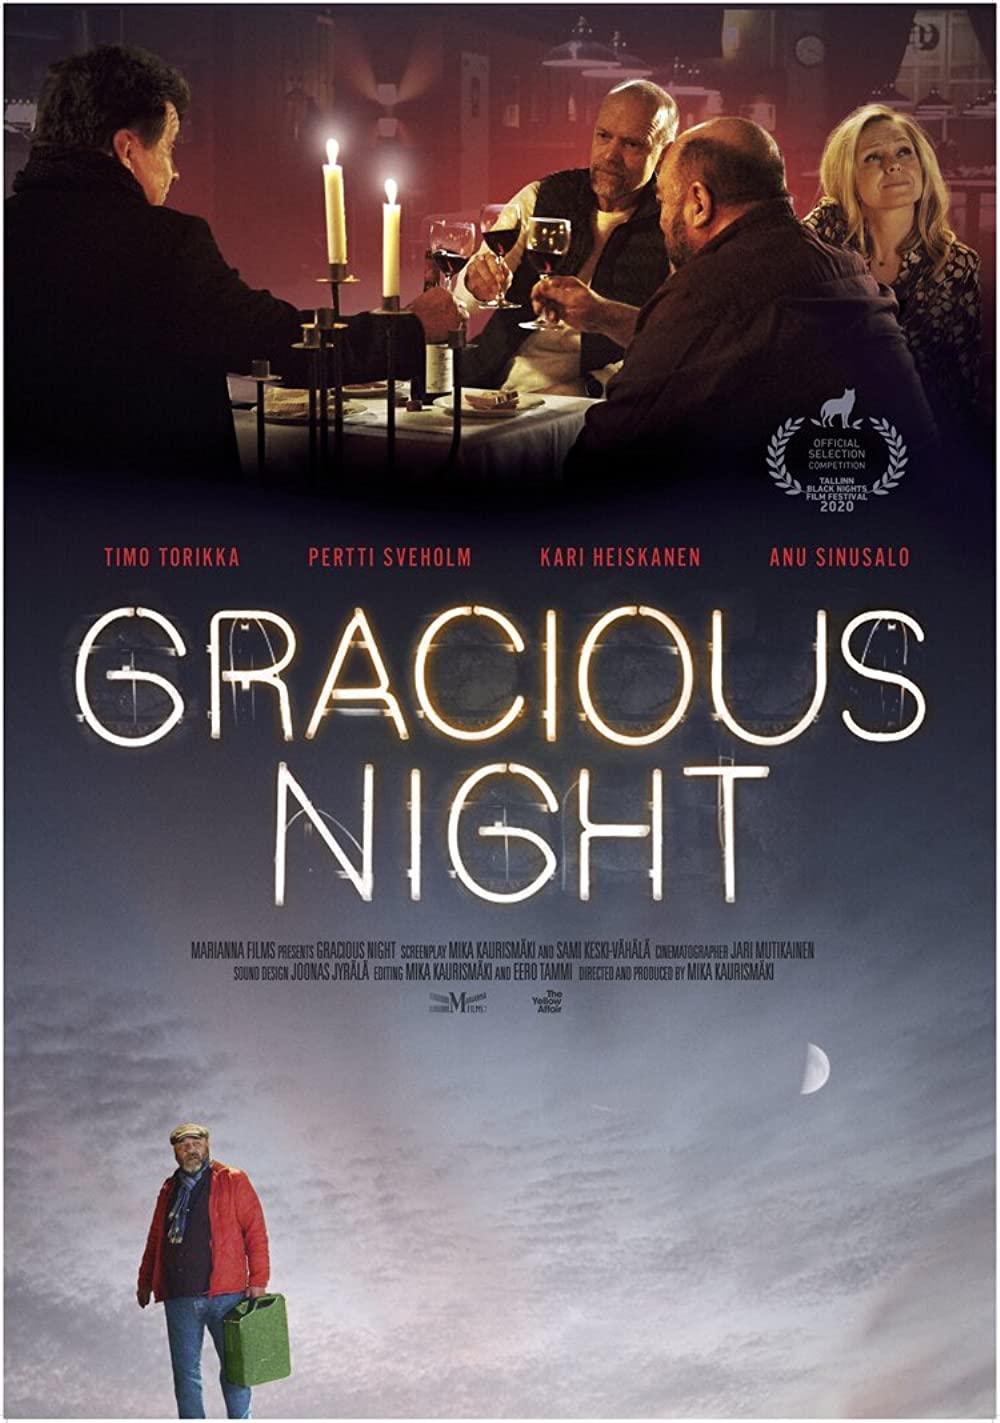 Filmbeschreibung zu Gracious Night (OV)